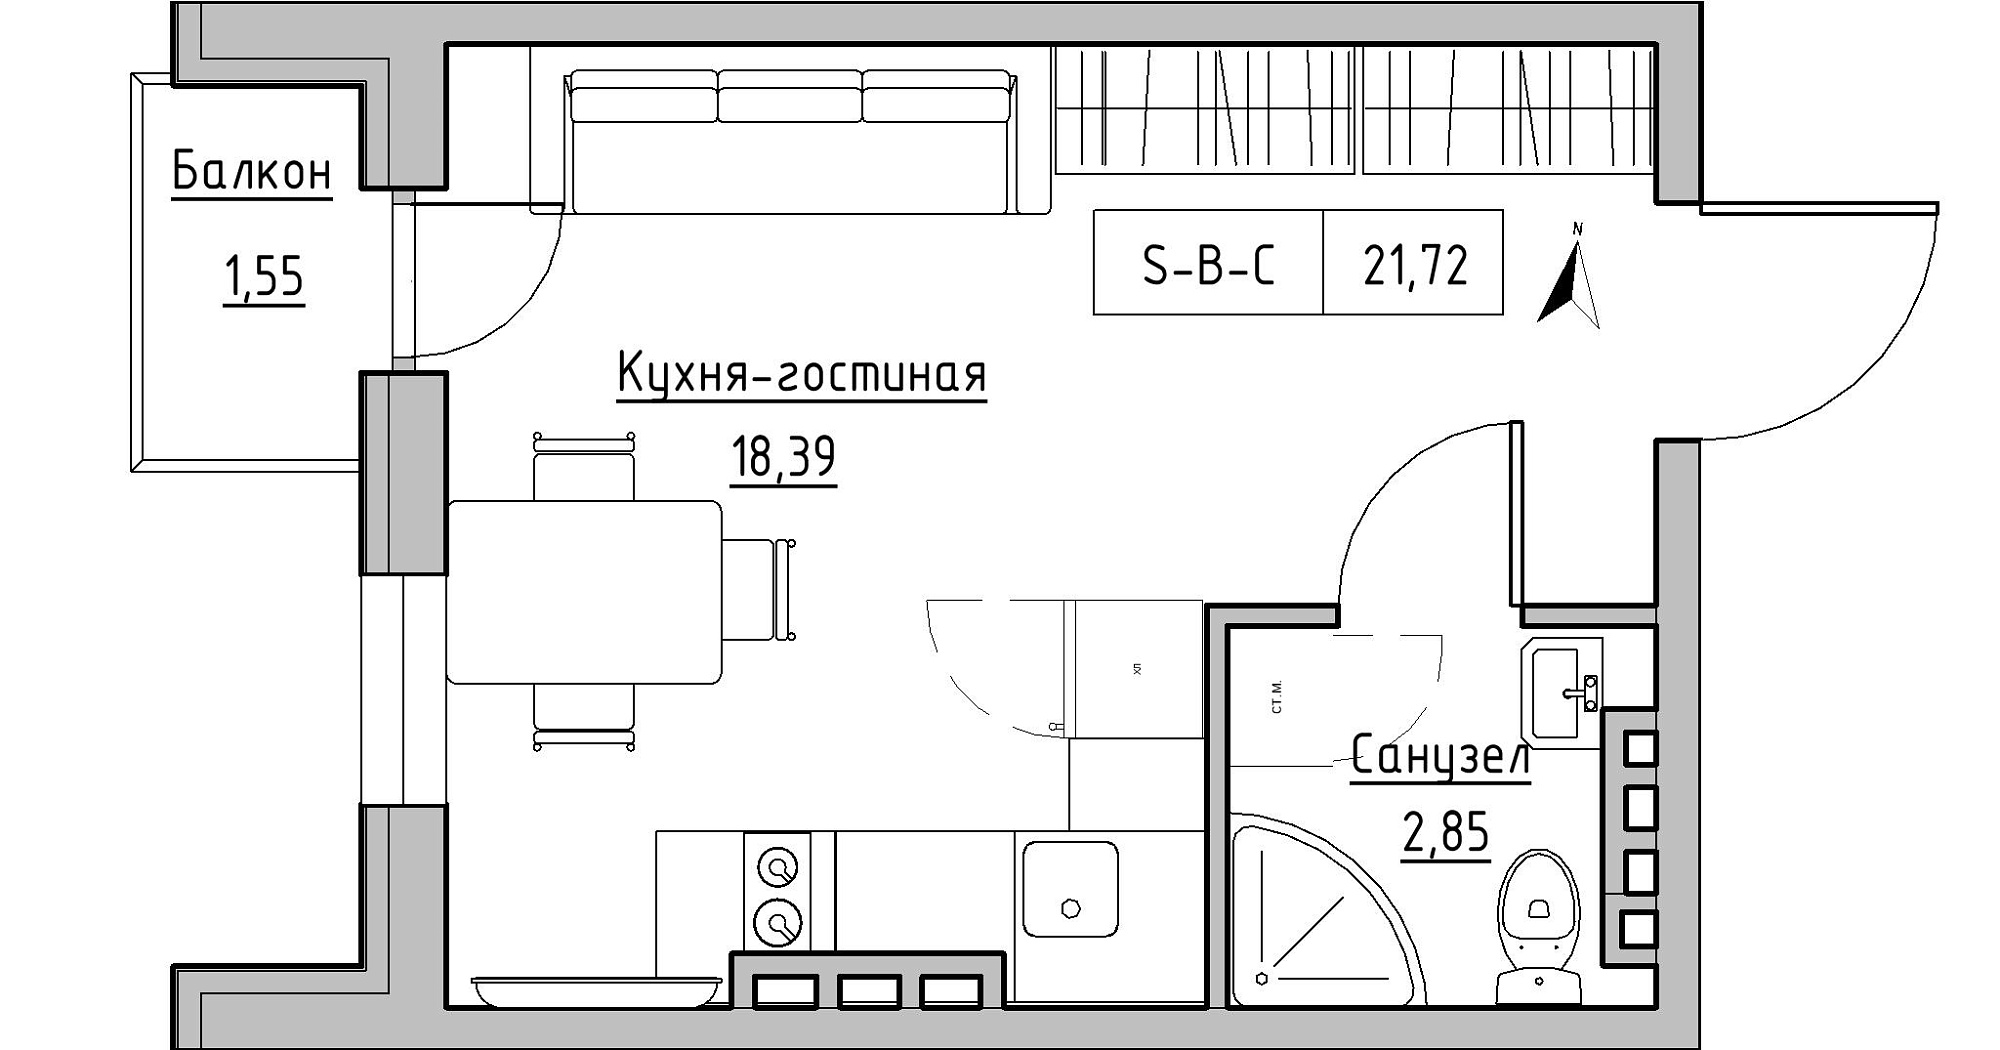 Planning Smart flats area 21.72m2, KS-024-04/0012.